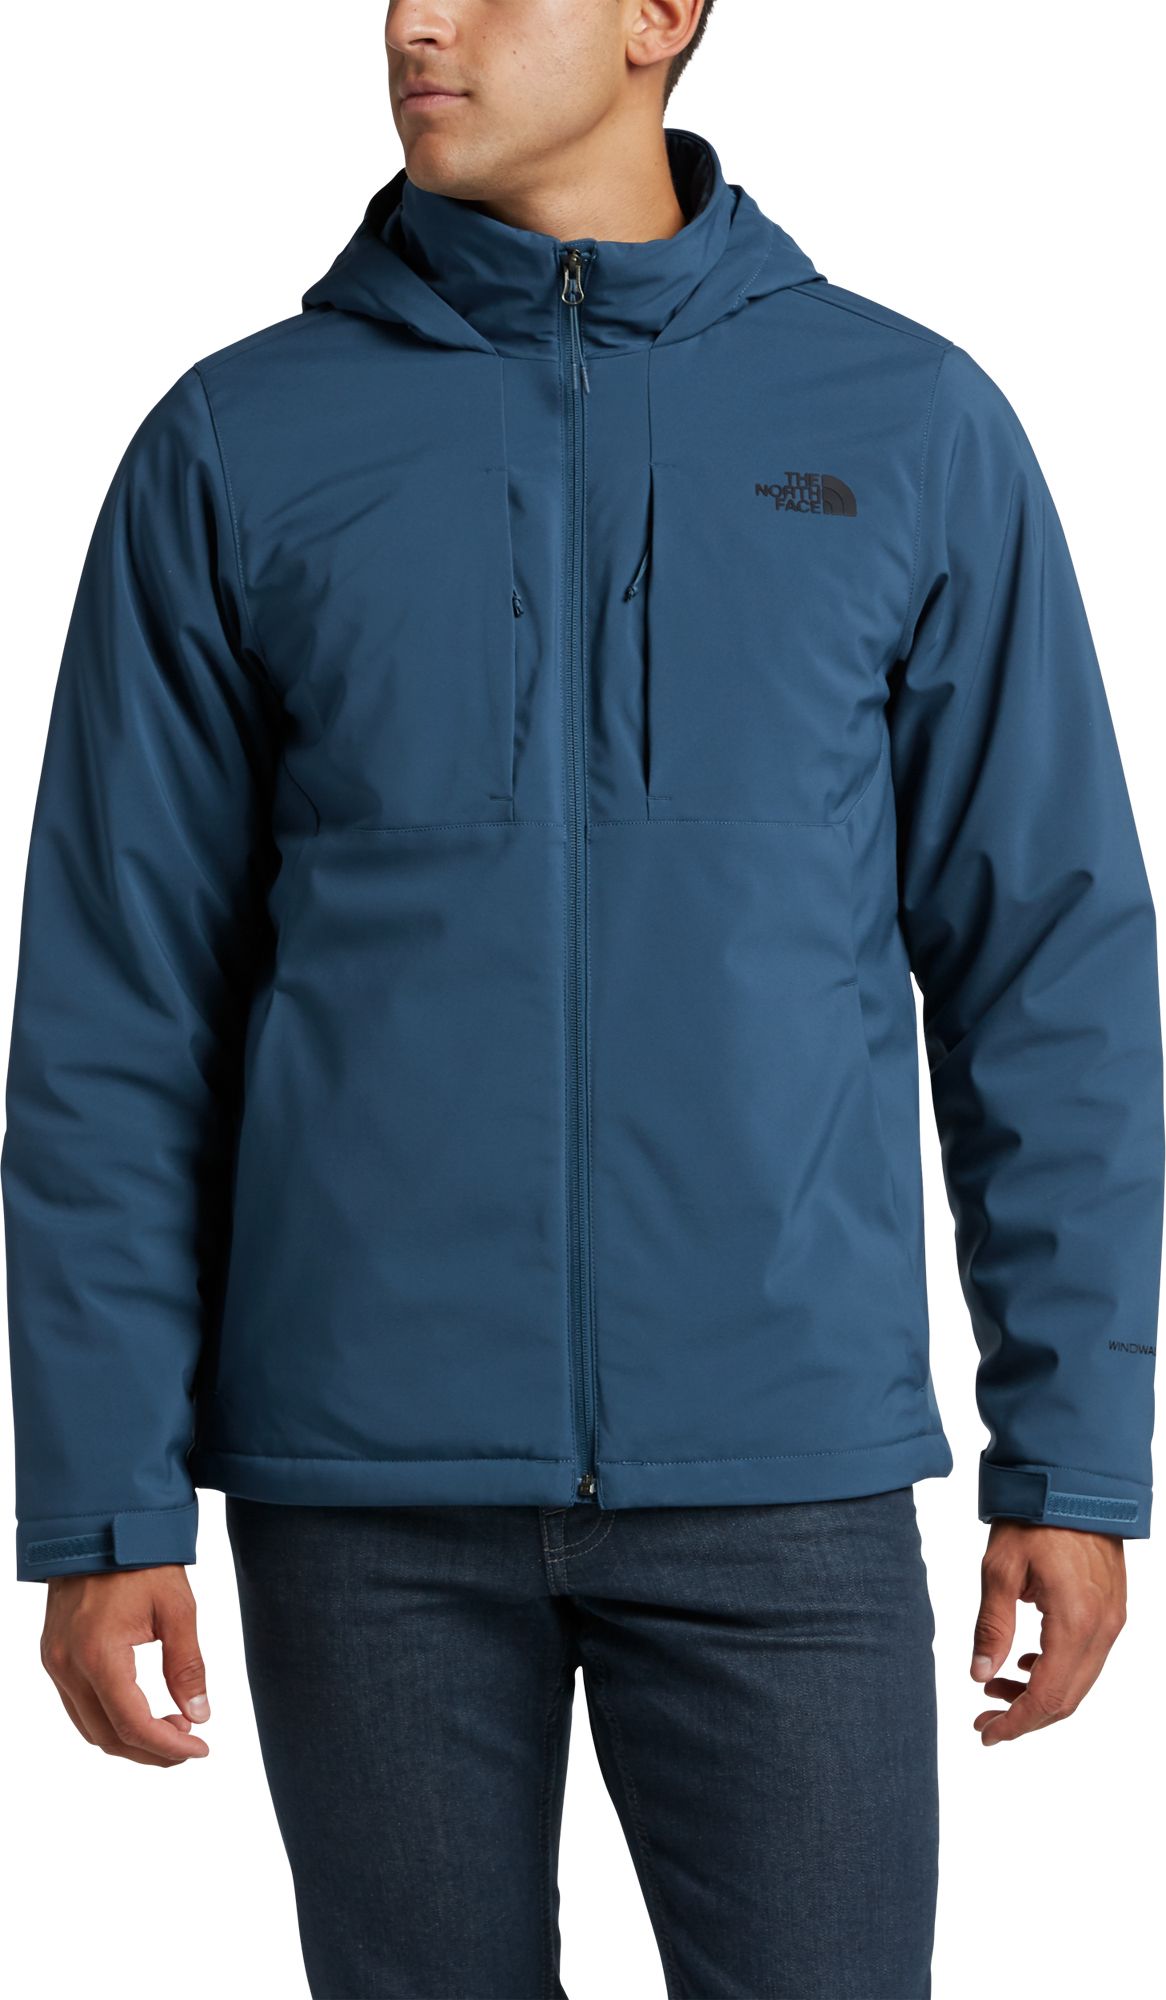 men's apex elevation jacket sale